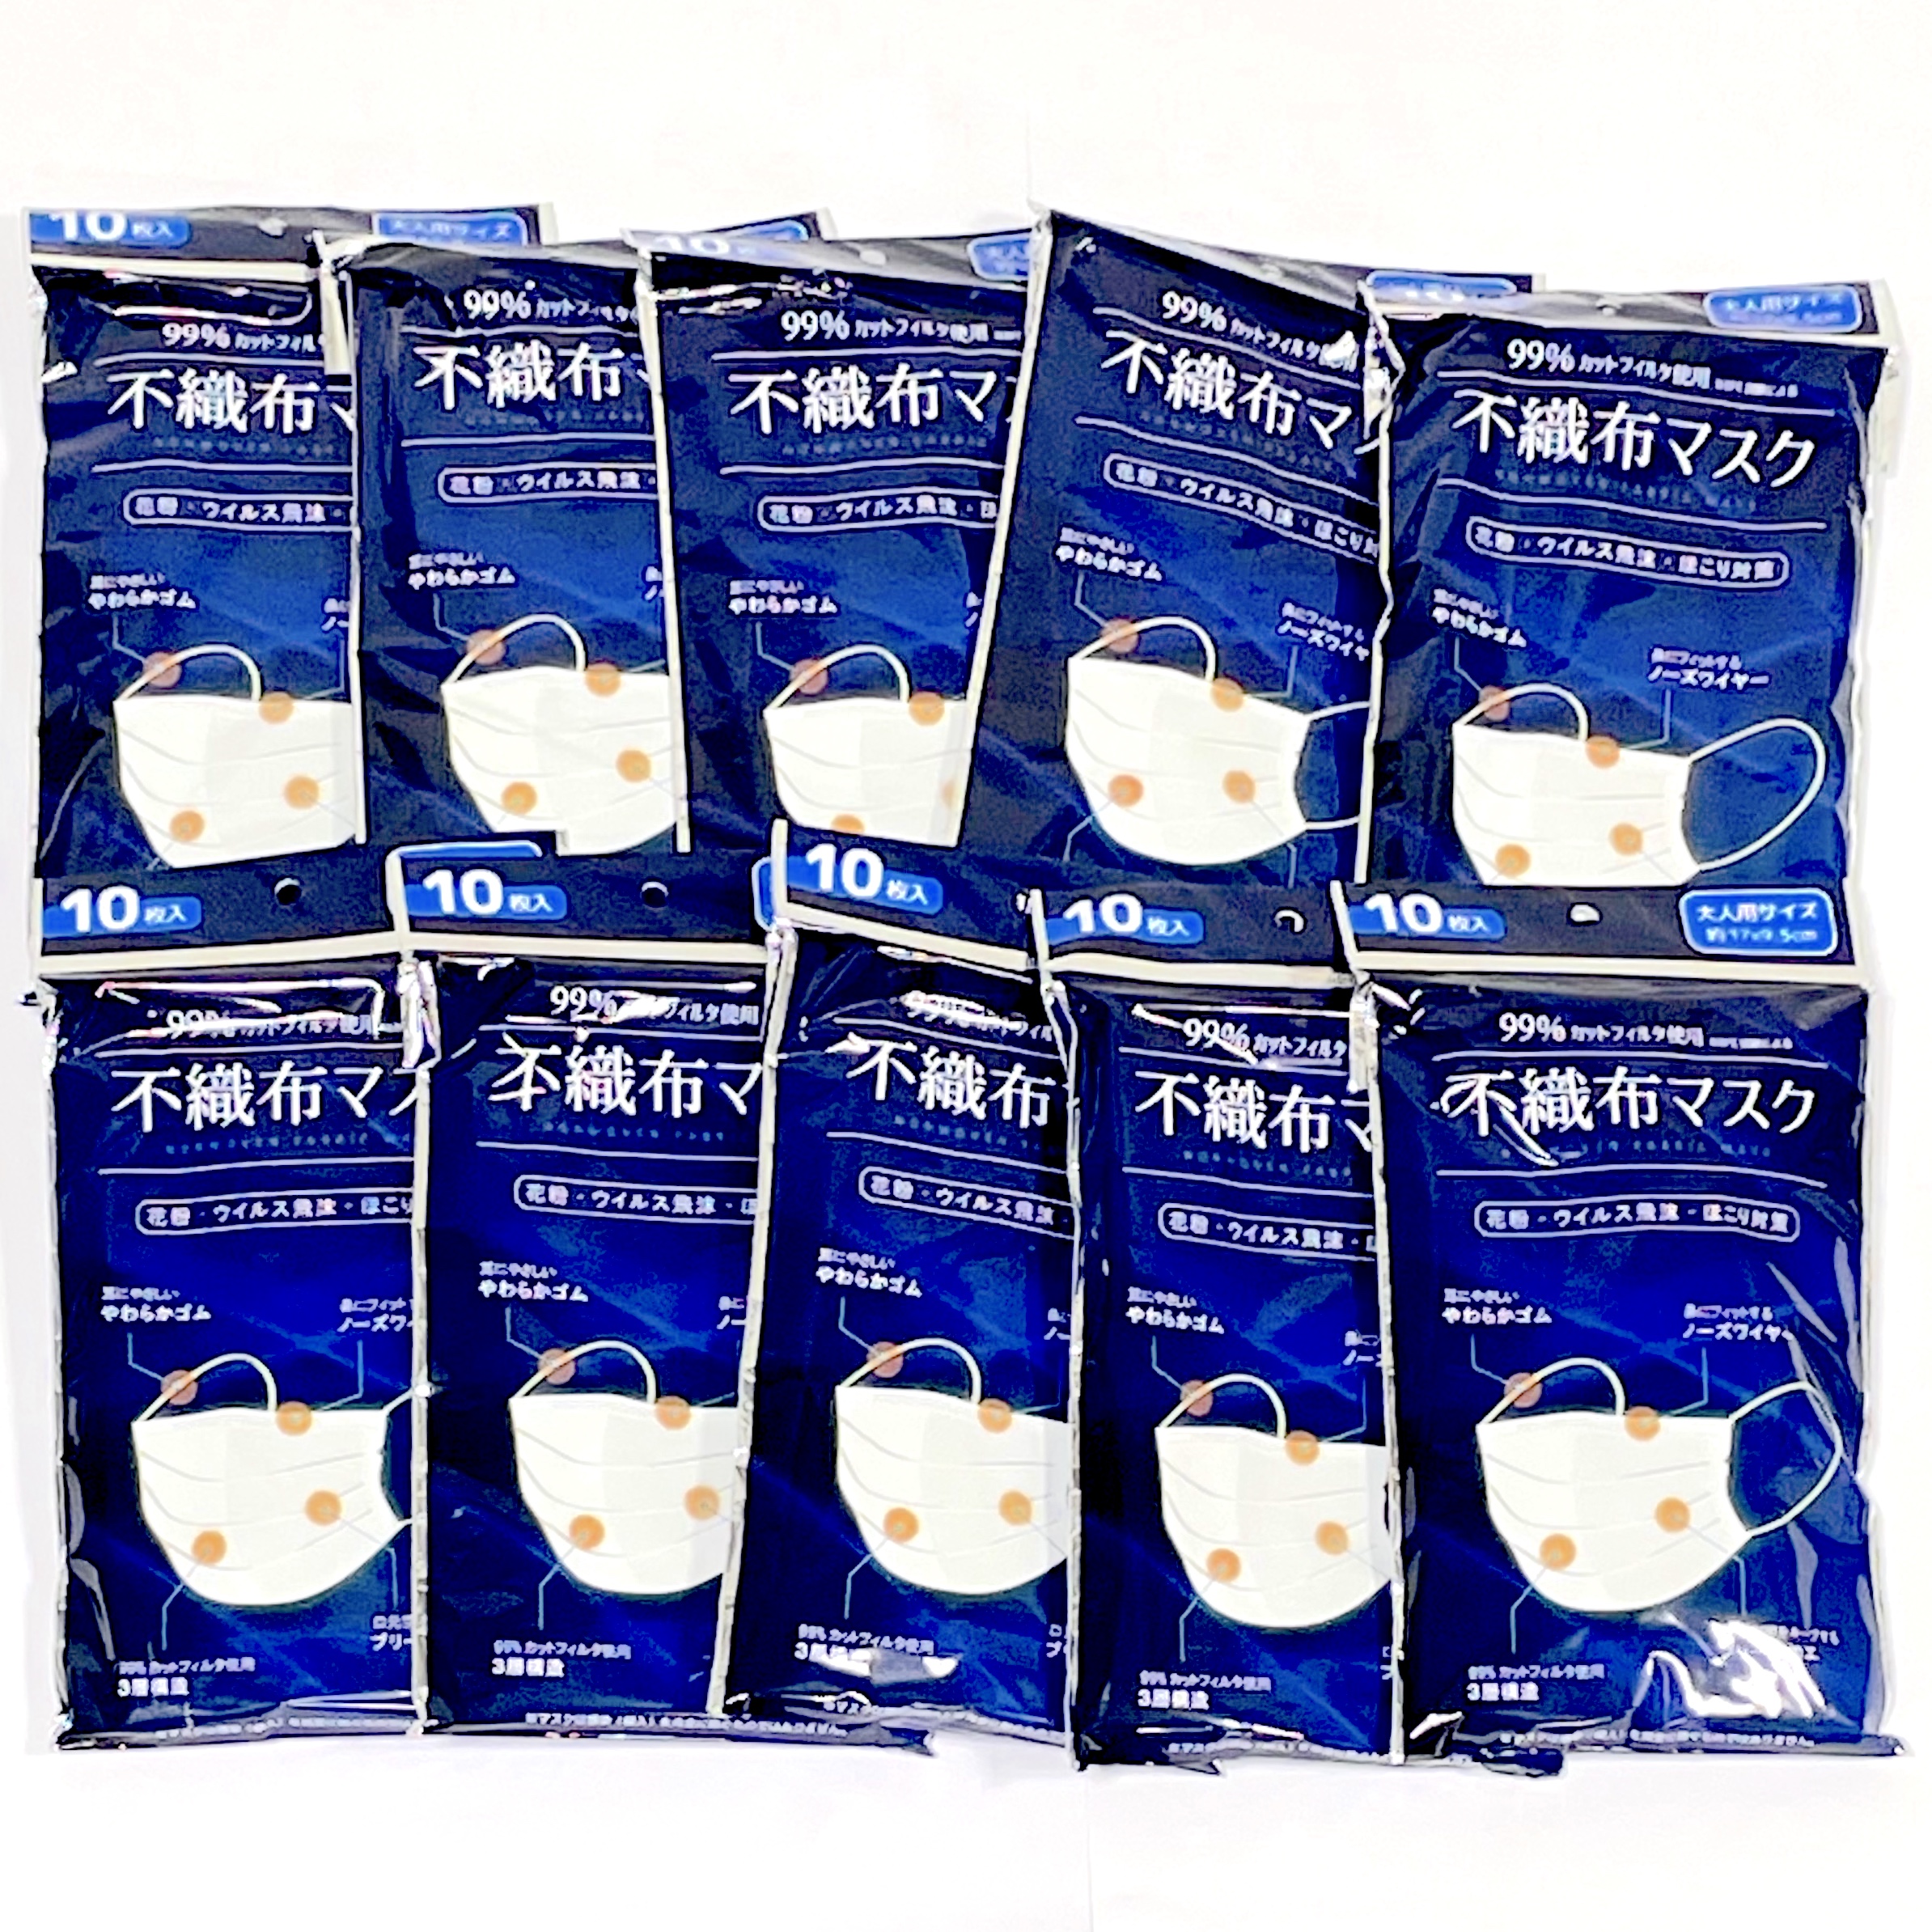 Mask Nonwoven Fabric 不織布マスク 100枚セット - Skyart JAPAN